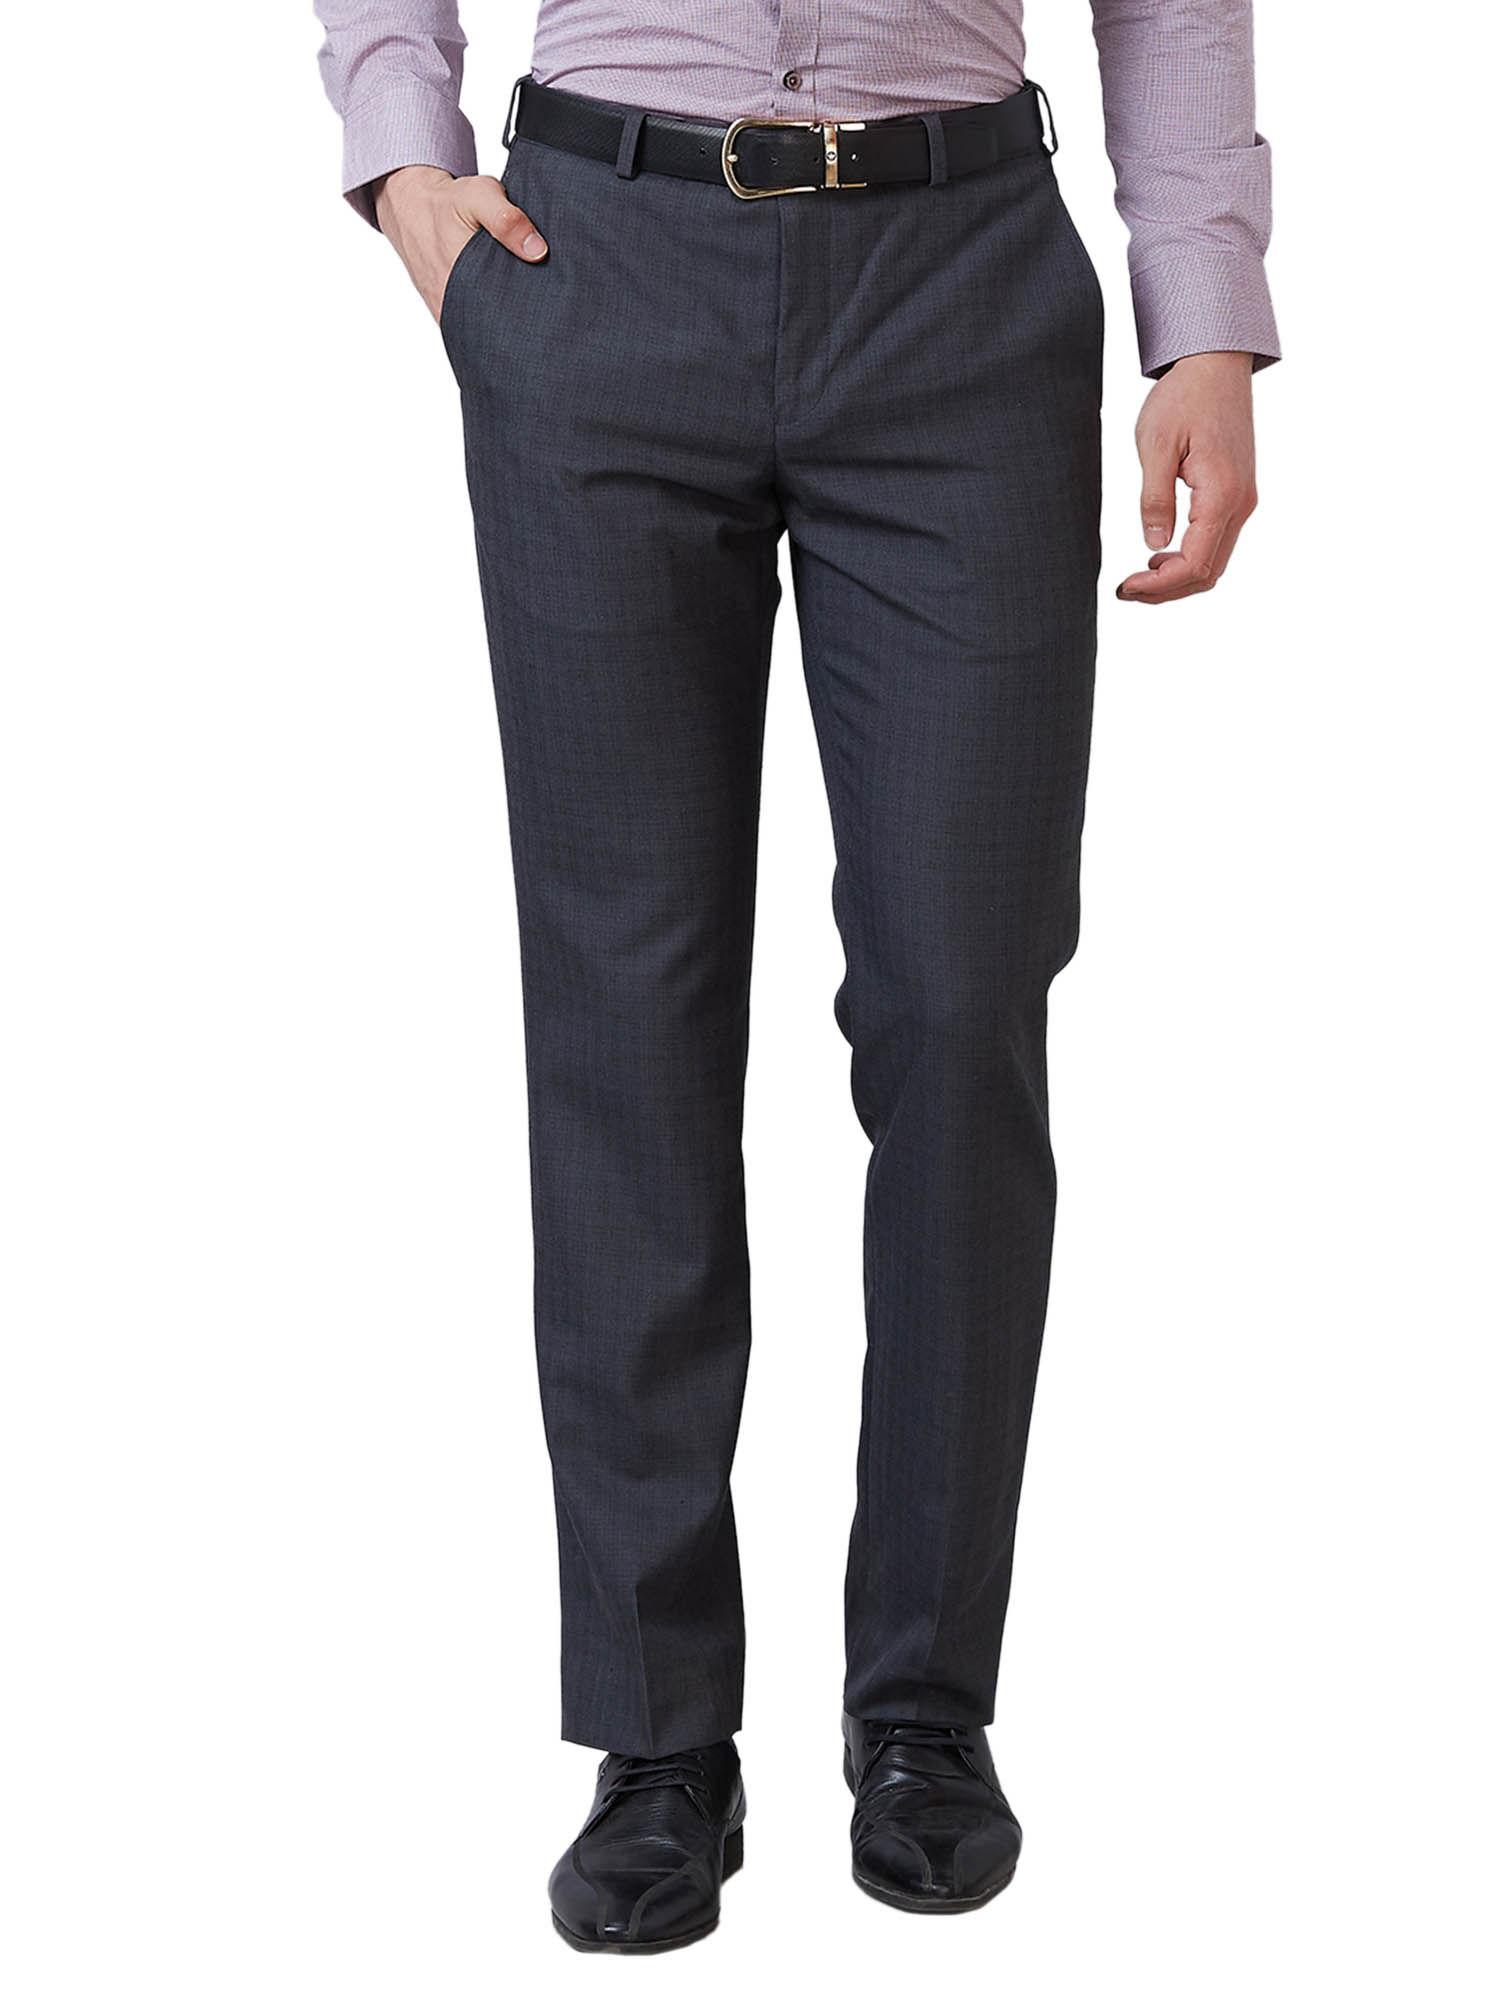 regular-fit-solid-dark-grey-trouser